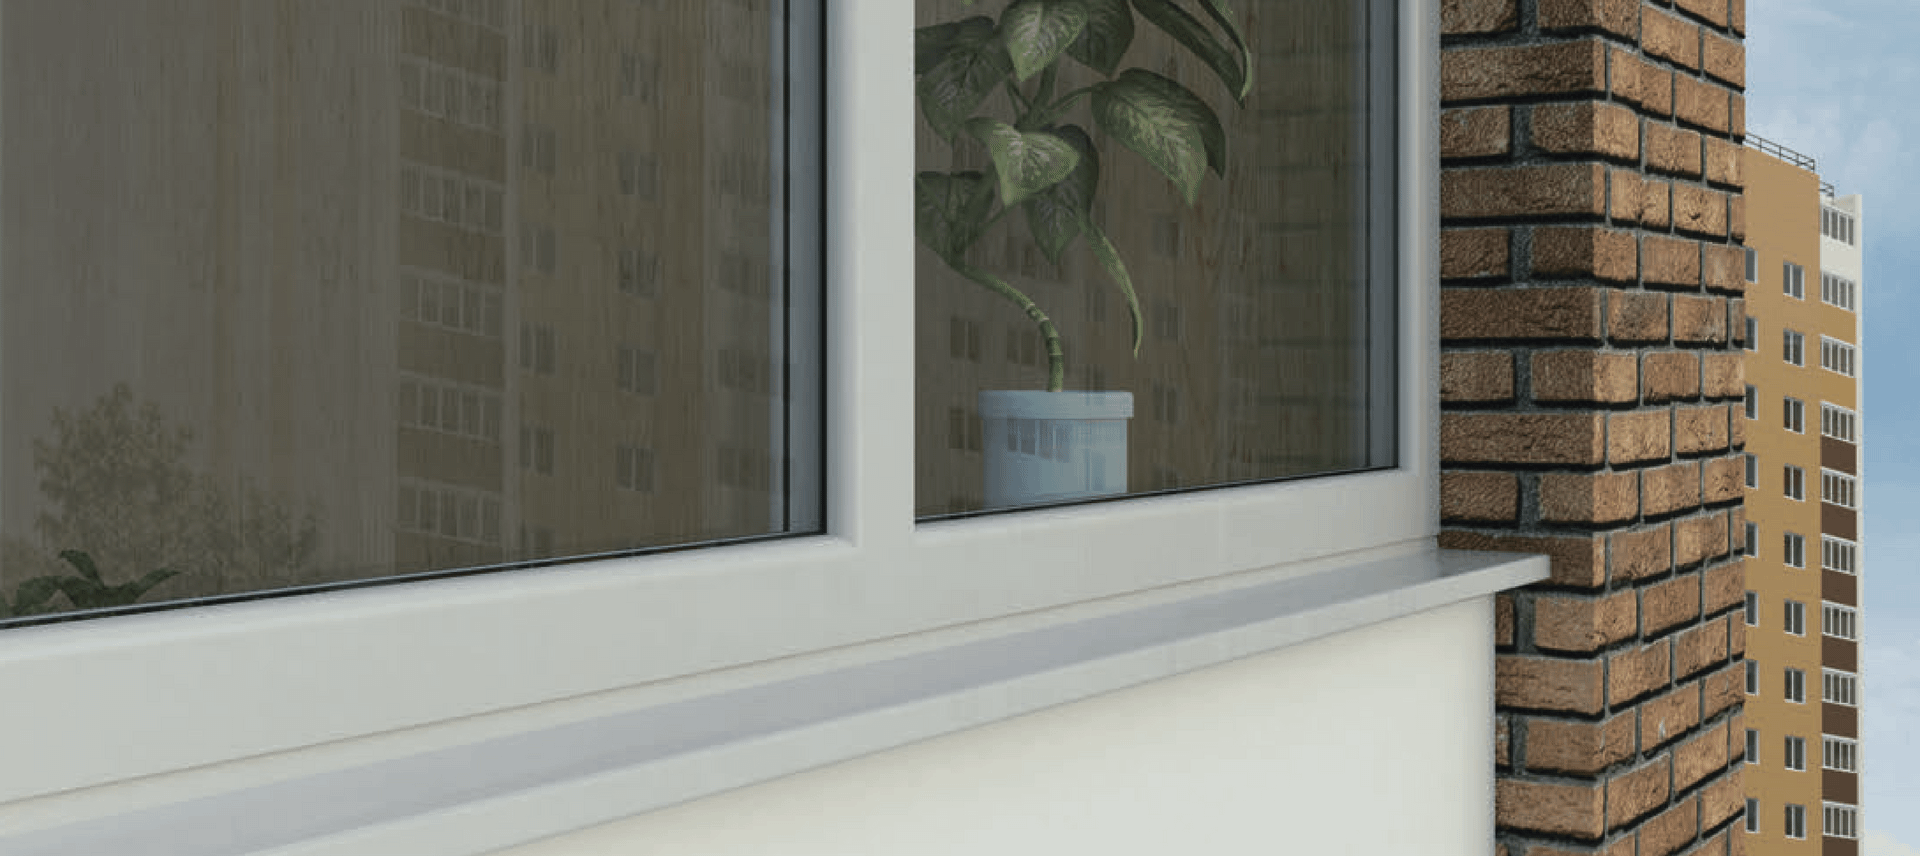 Выбор ширины подоконника на окна с учетом конвекции воздуха от радиатора